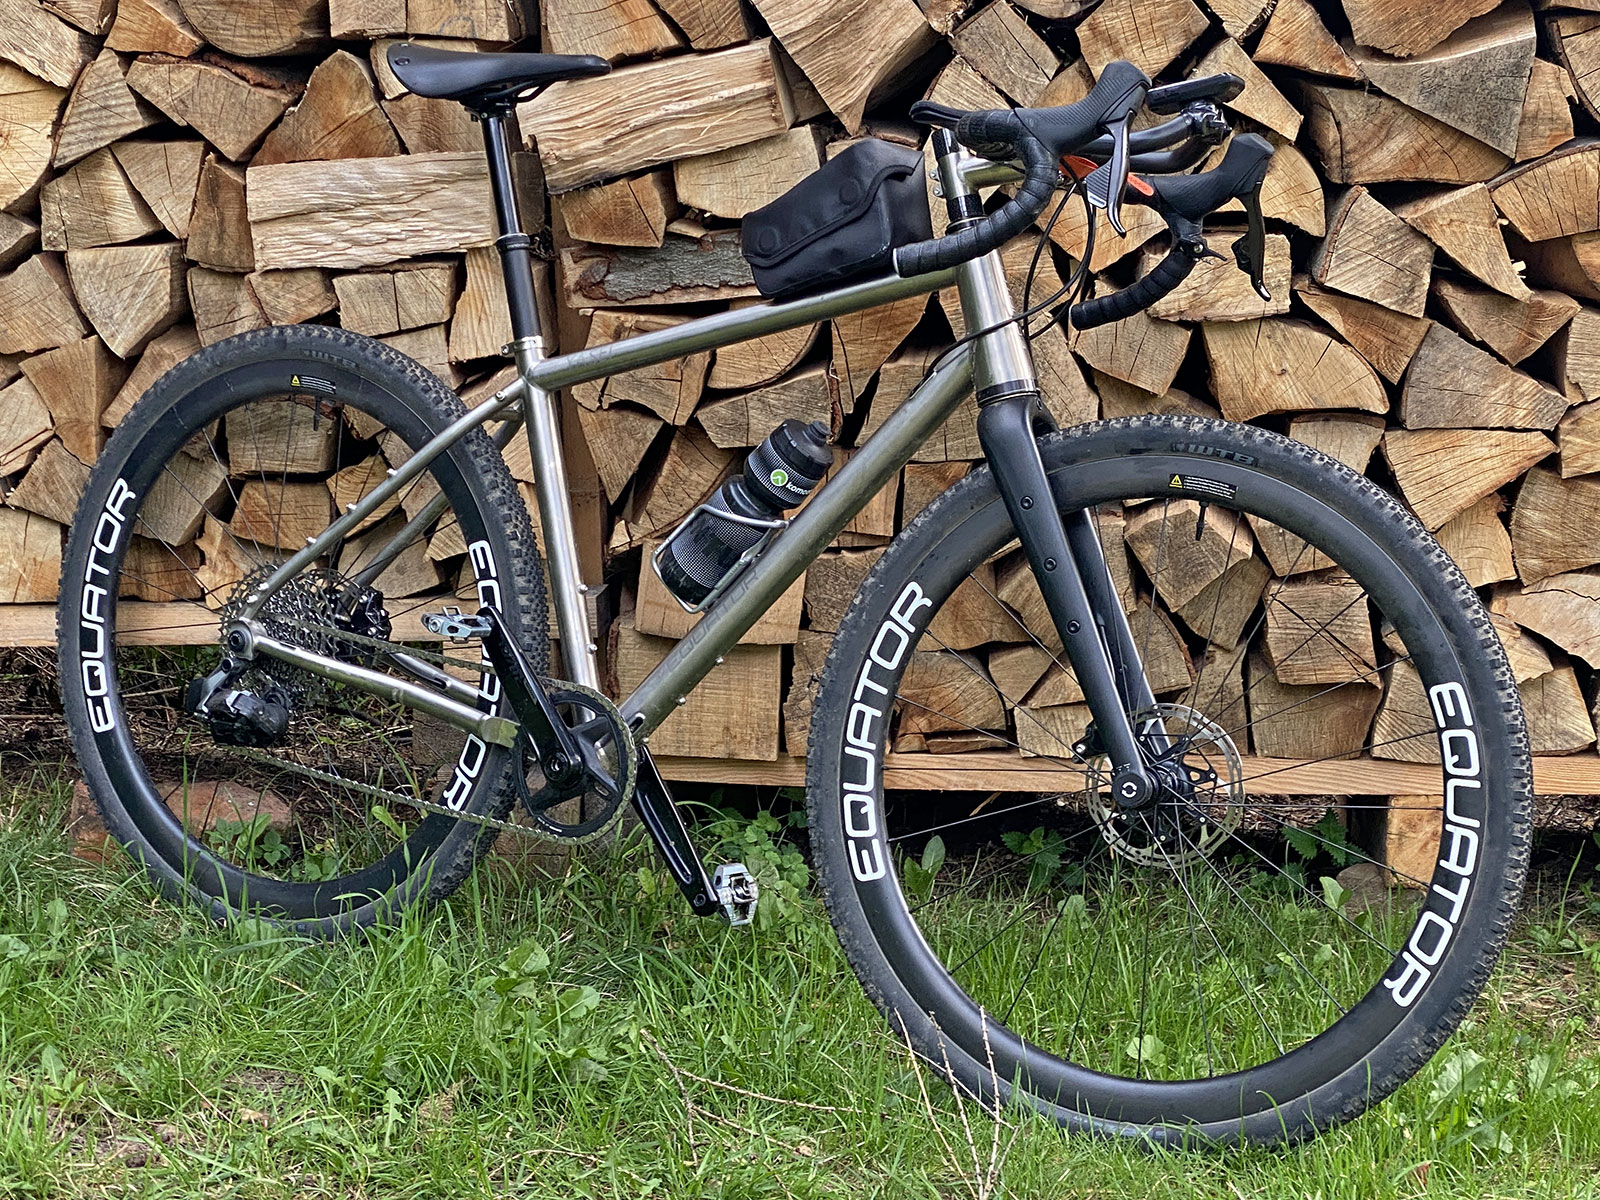 Equator Yasei titanium affordable gravel bike review, angled